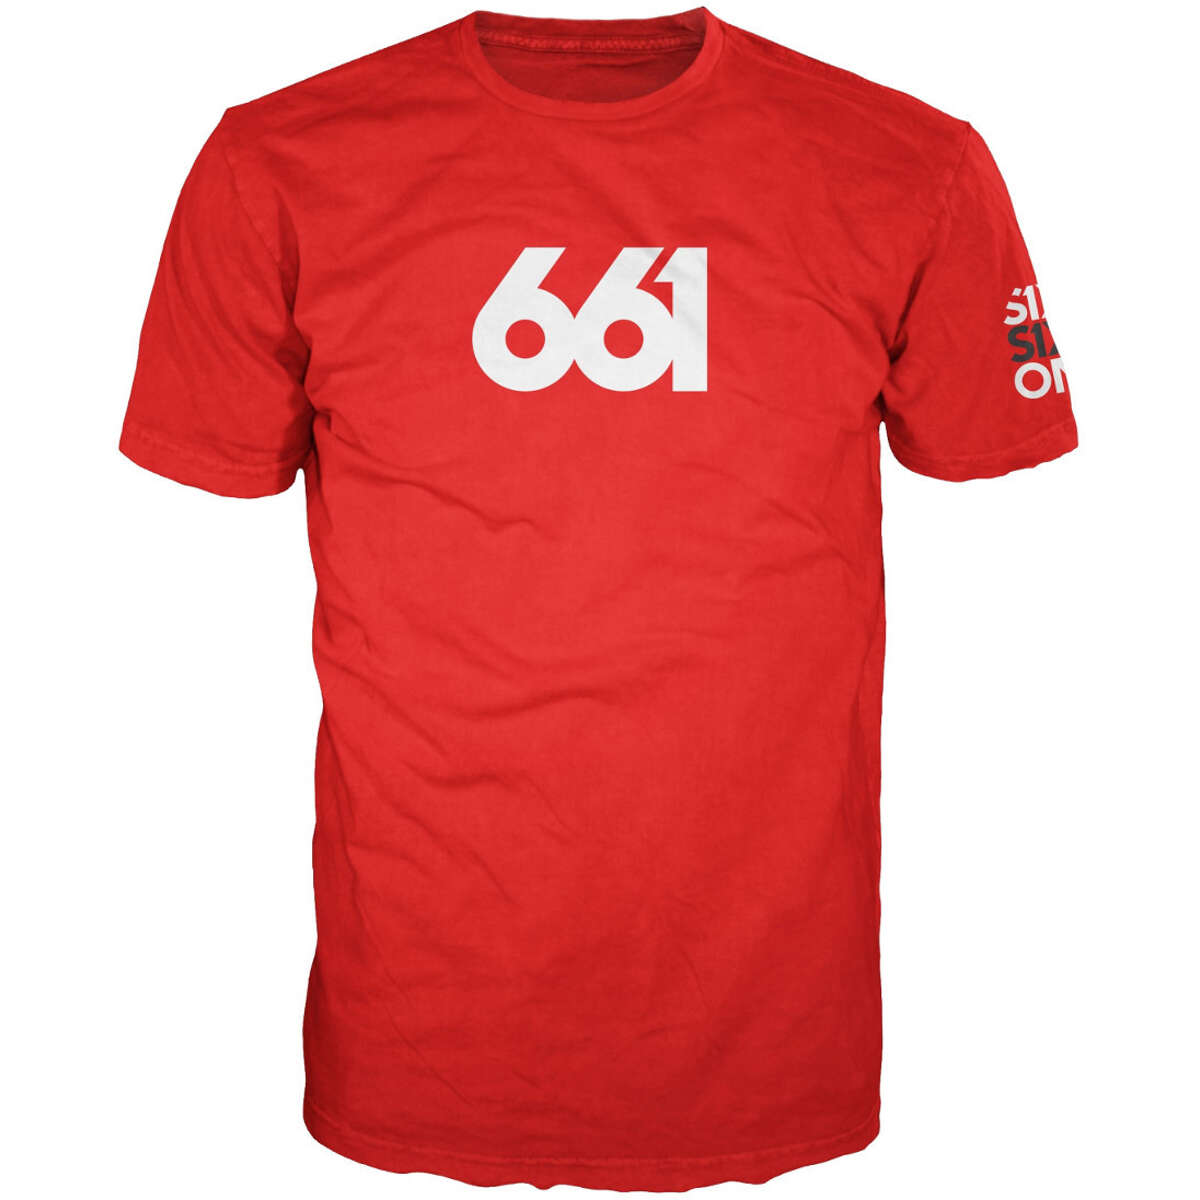 SixSixOne T-Shirt Numeric Premium Red